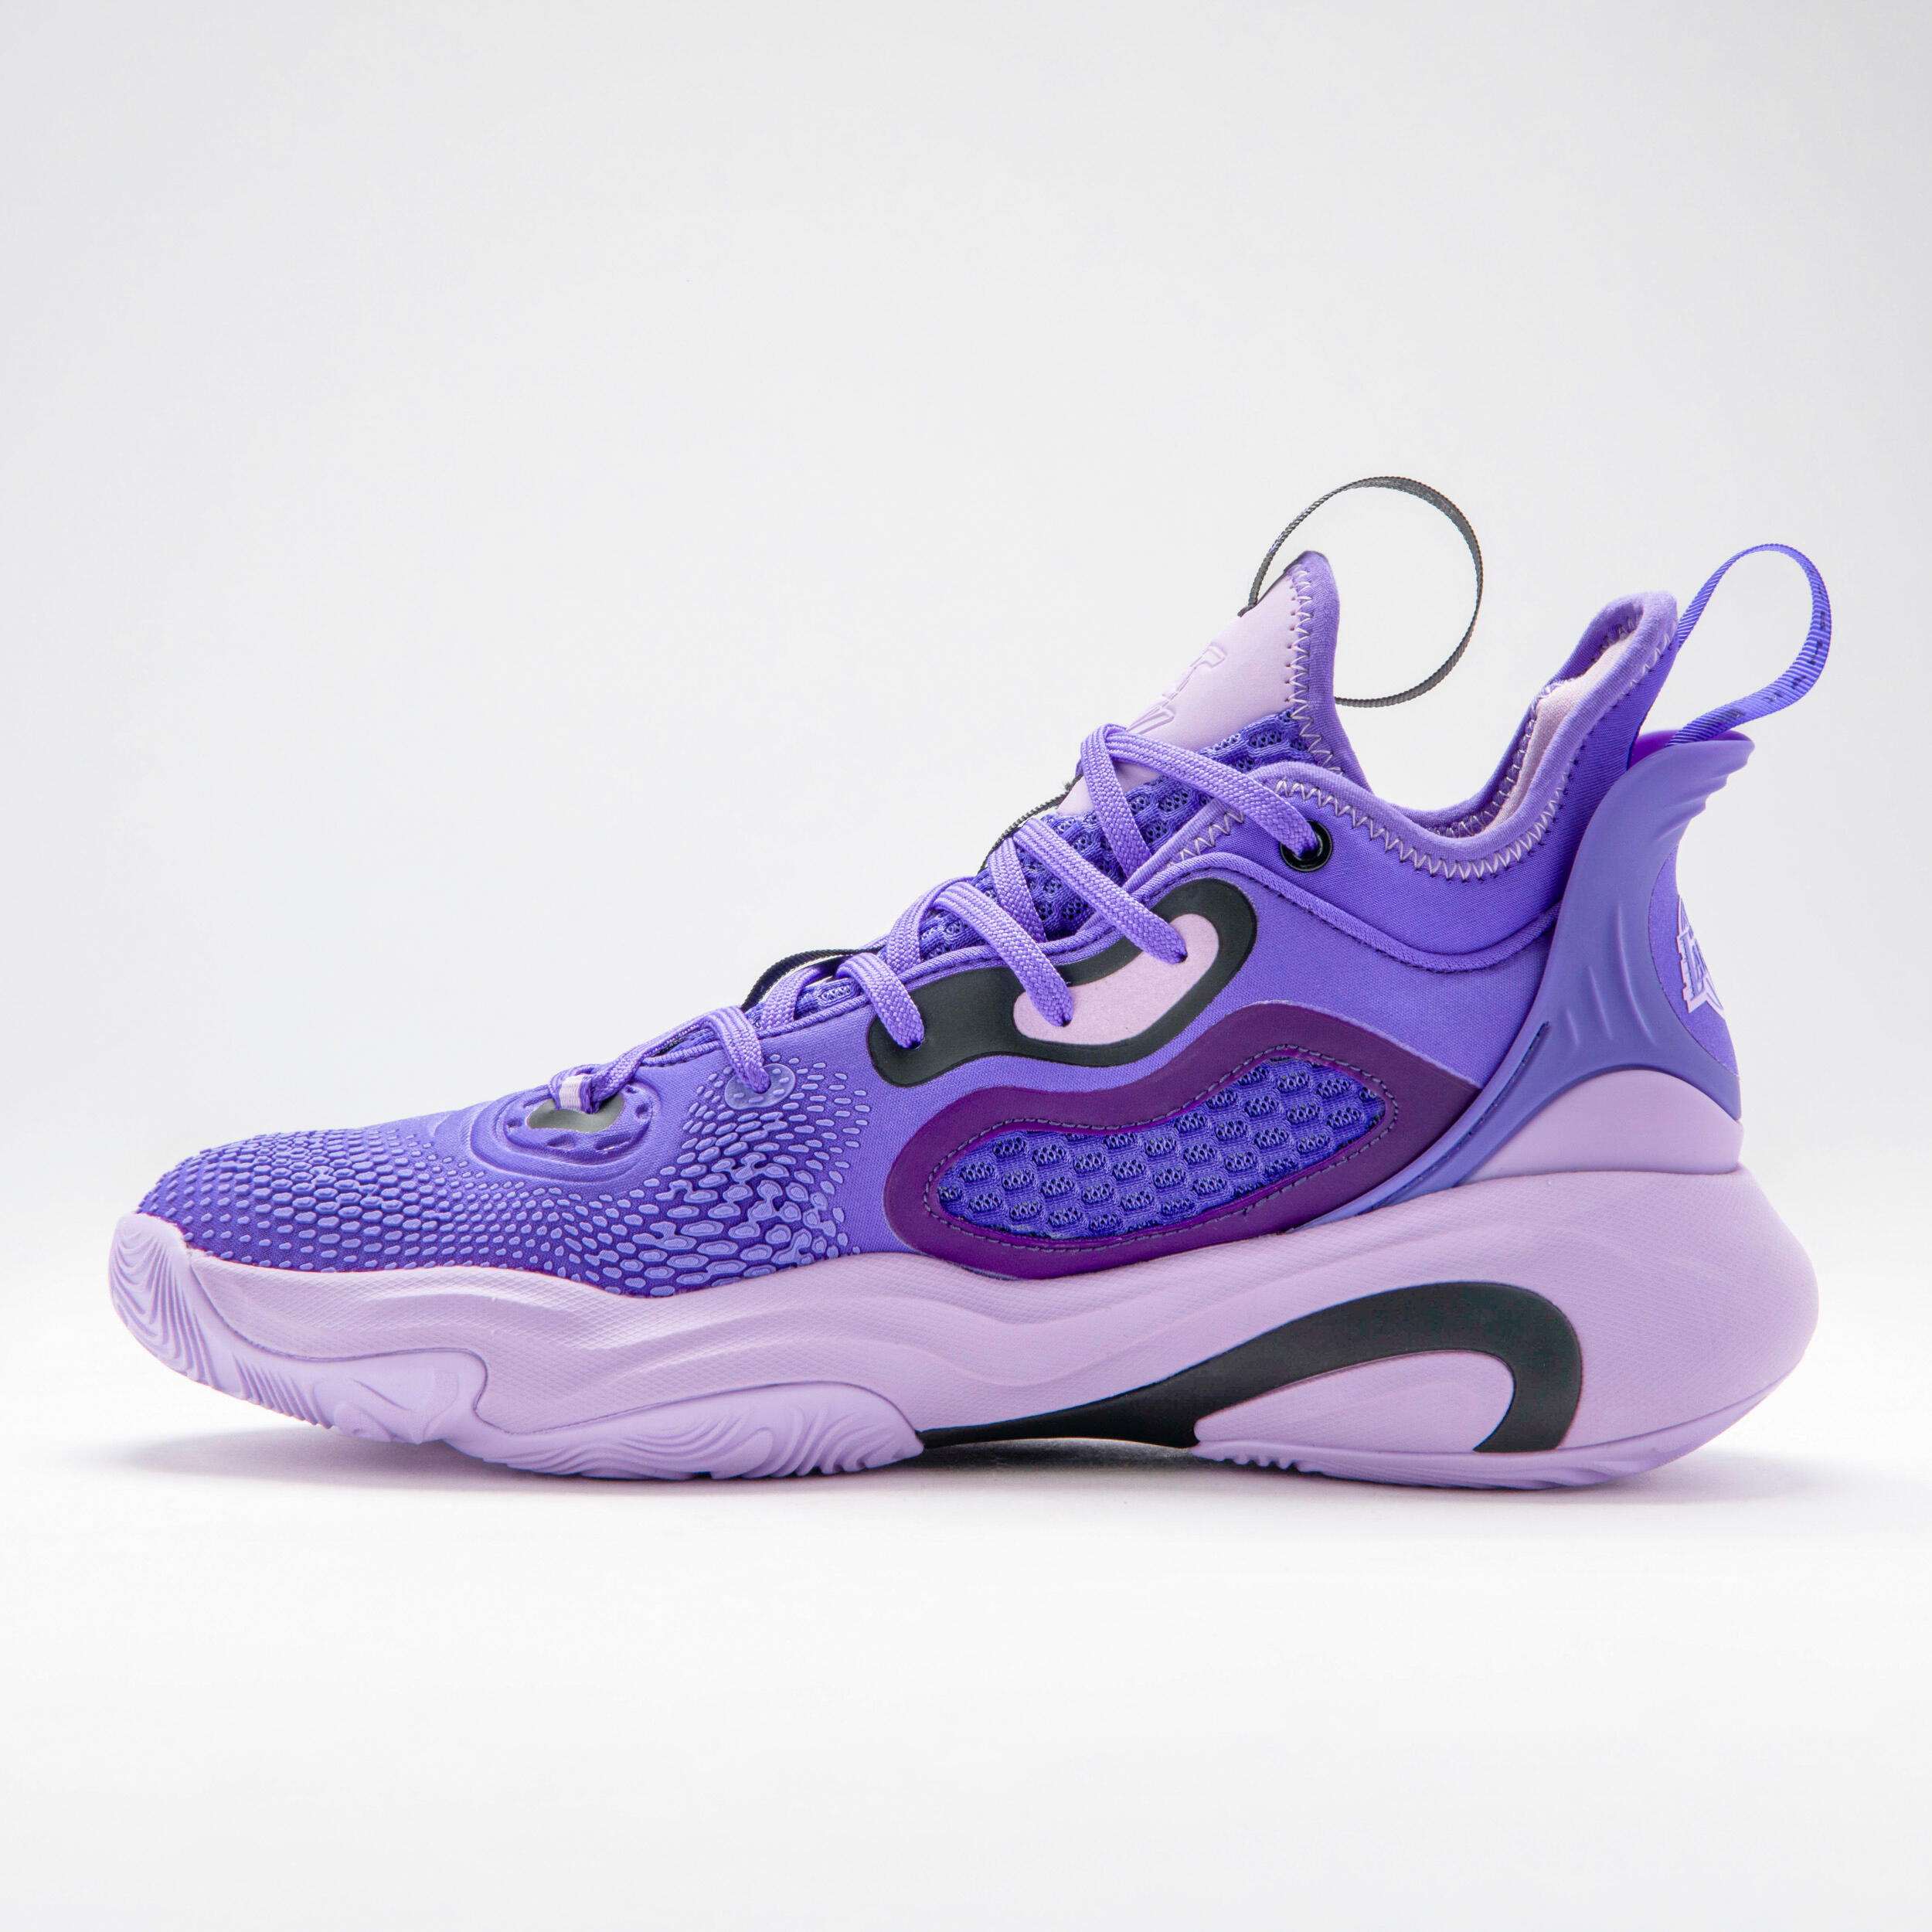 Men's/Women's Basketball Shoes SE900 - Purple/NBA Los Angeles Lakers 2/17